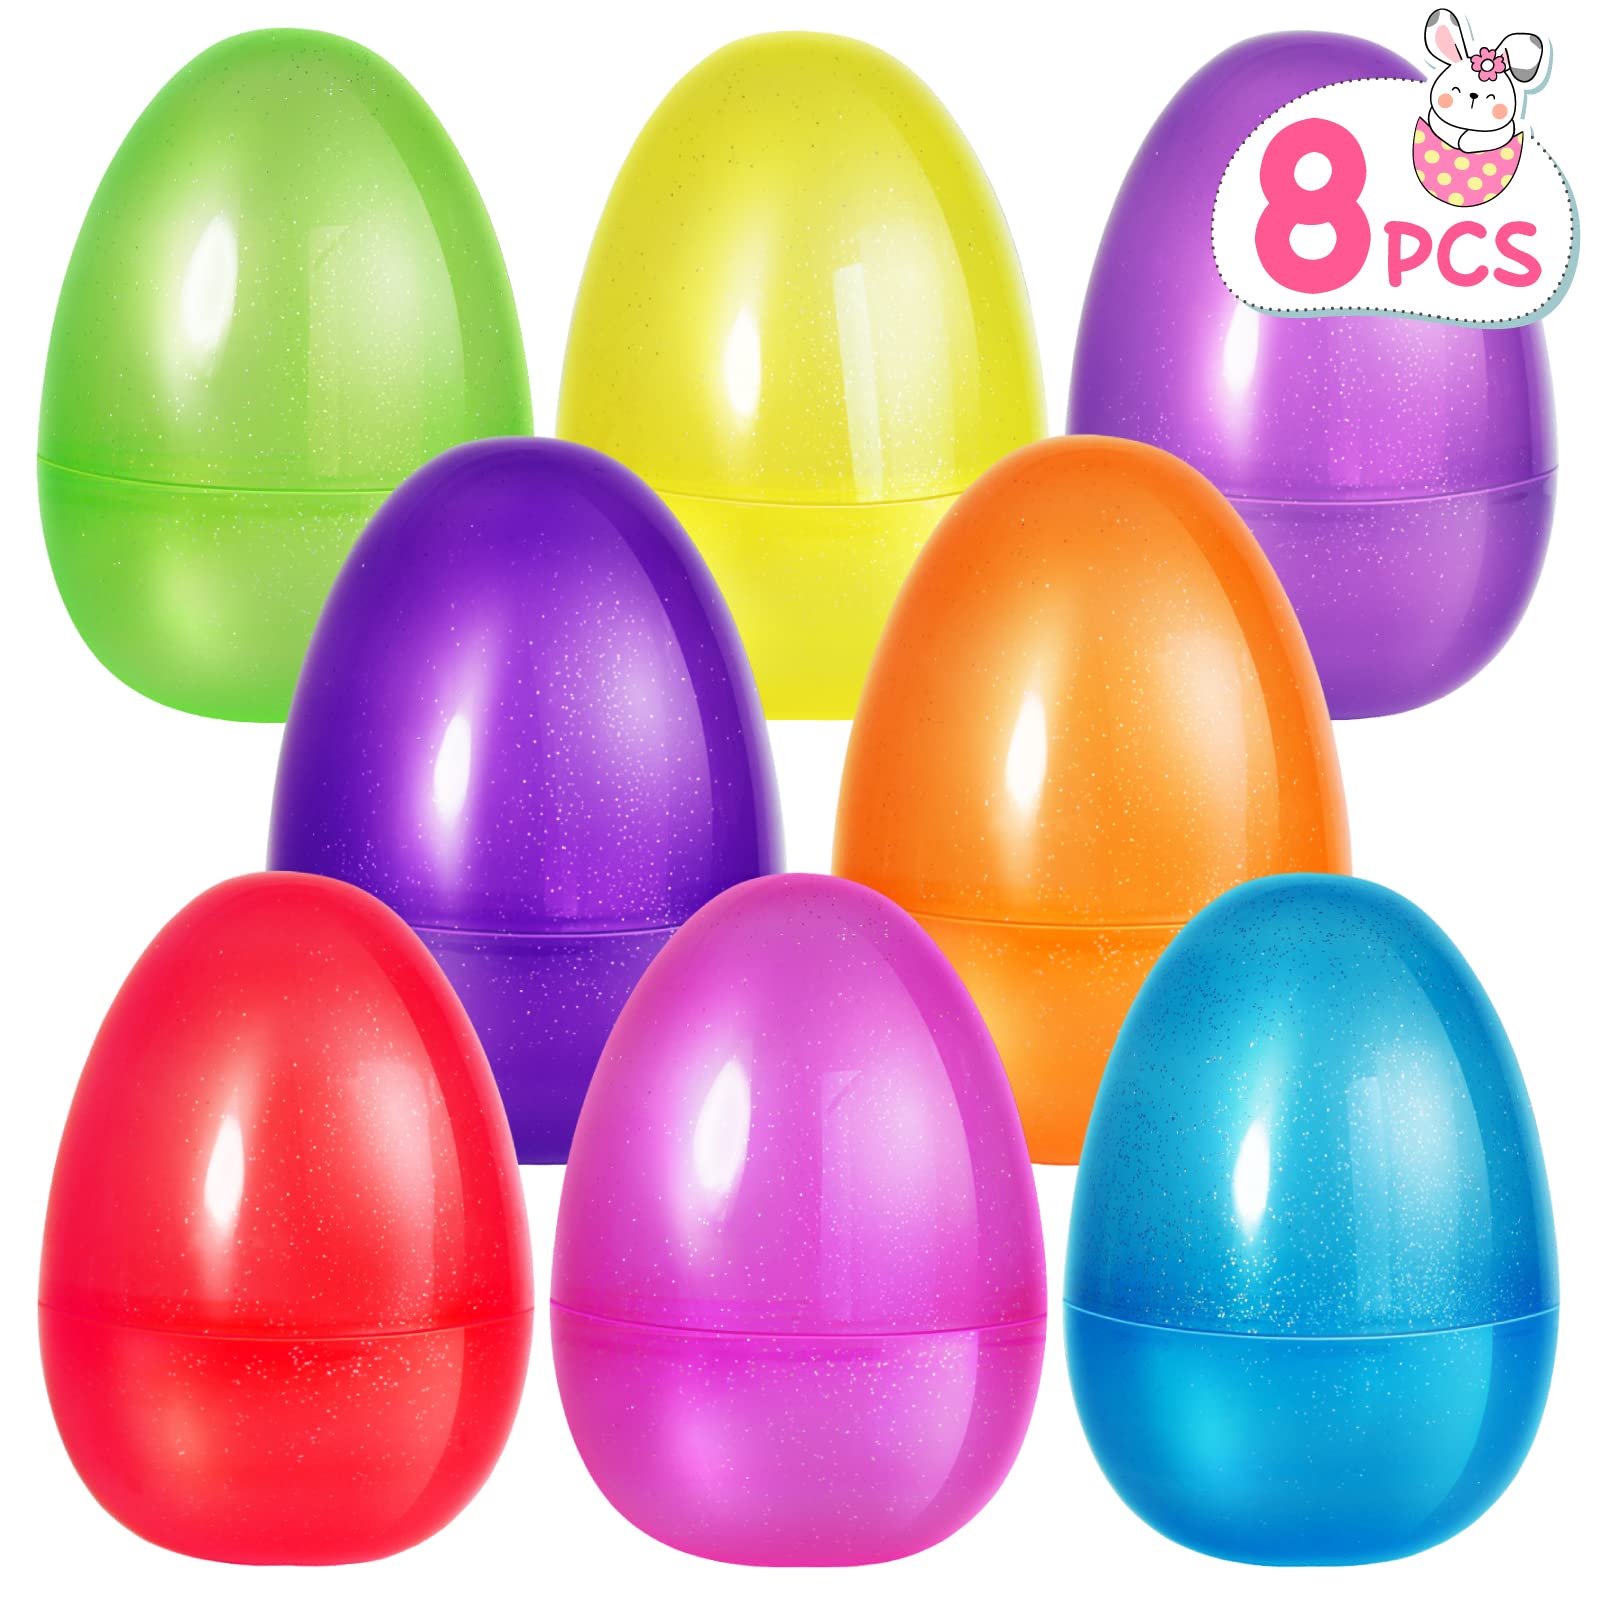 Mua Pcs Jumbo Easter Eggs Plastic Large Easter Eggs Fillable Easter Eggs For Easter Egg